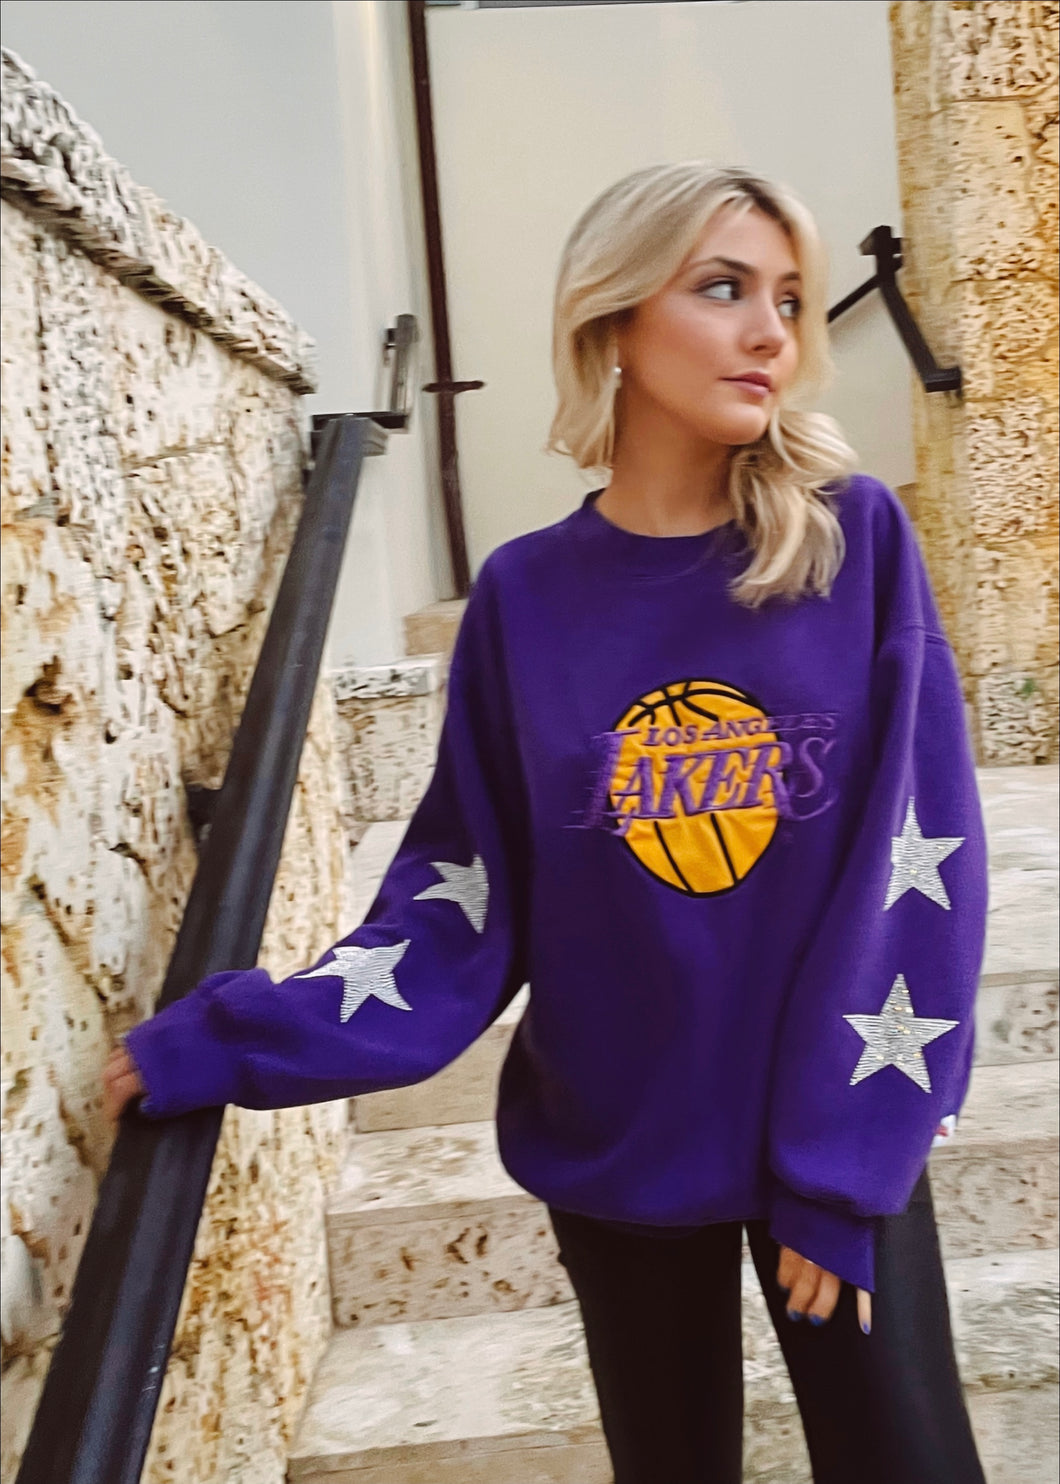 LA Lakers, NBA One of a KIND Vintage Sweatshirt with Crystal Star Design